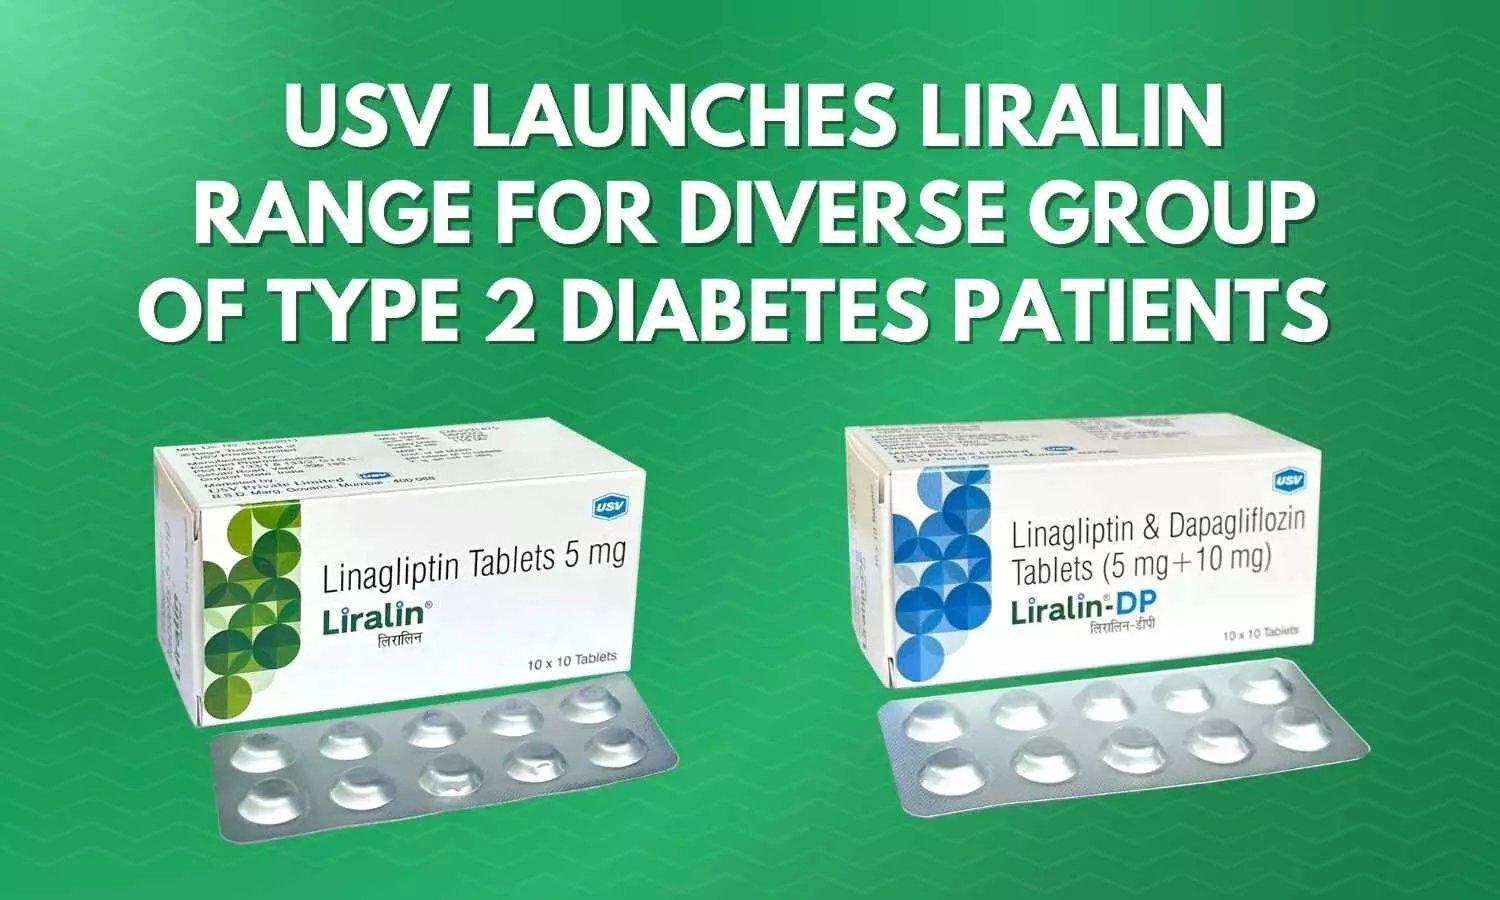 USV Launches Liralin Range for Diverse Group of Type 2 Diabetes Patients